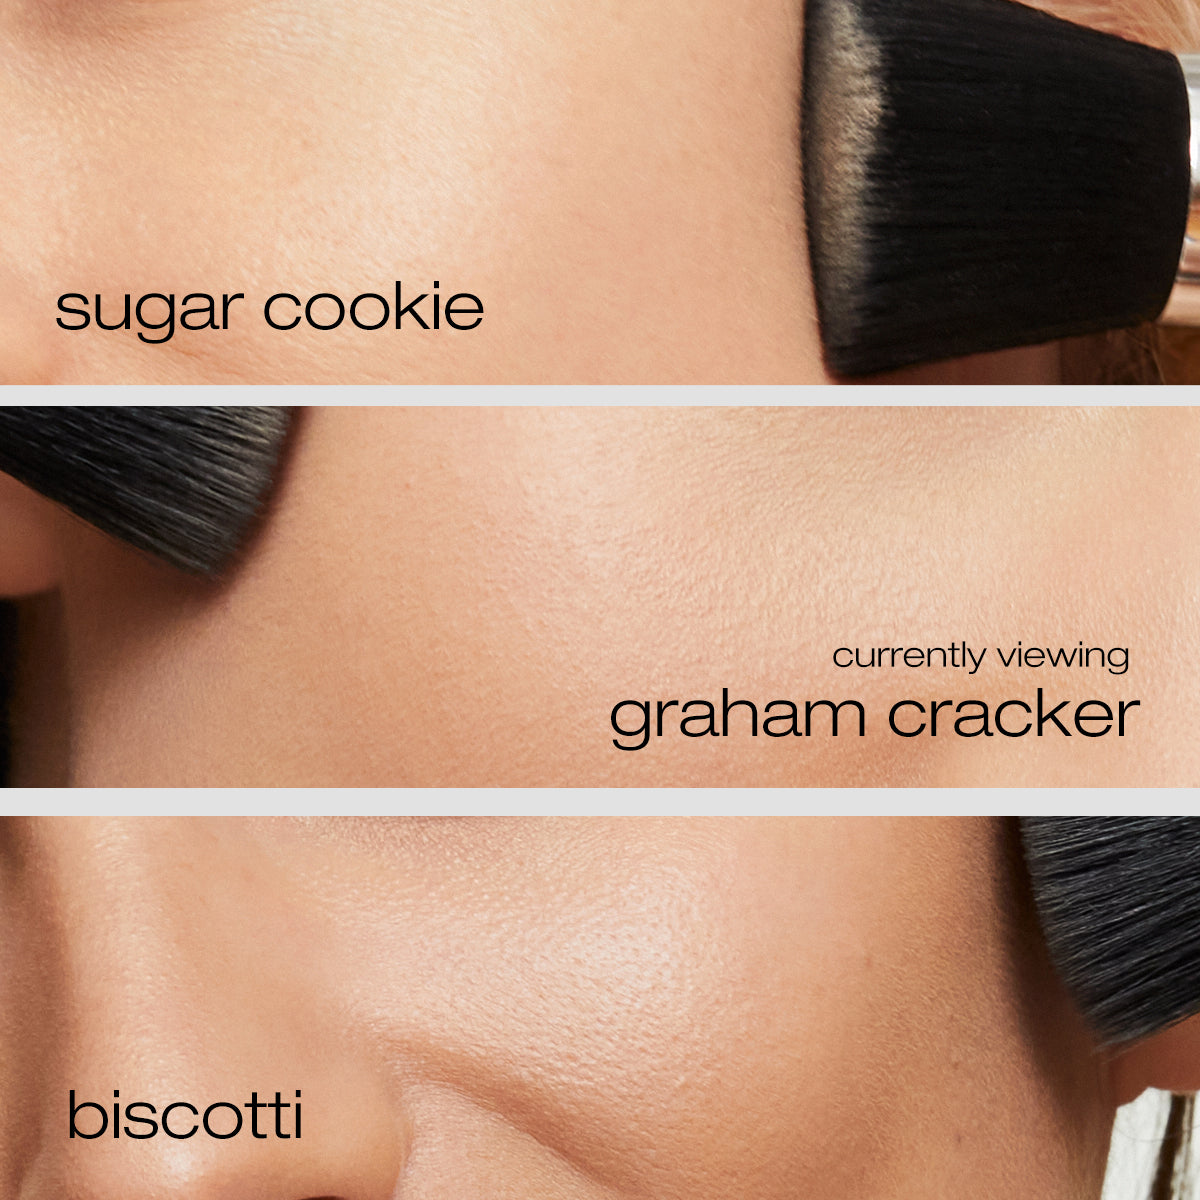 Model applying Sugar cookie, graham cracker, and biscotti foundation on cheeks